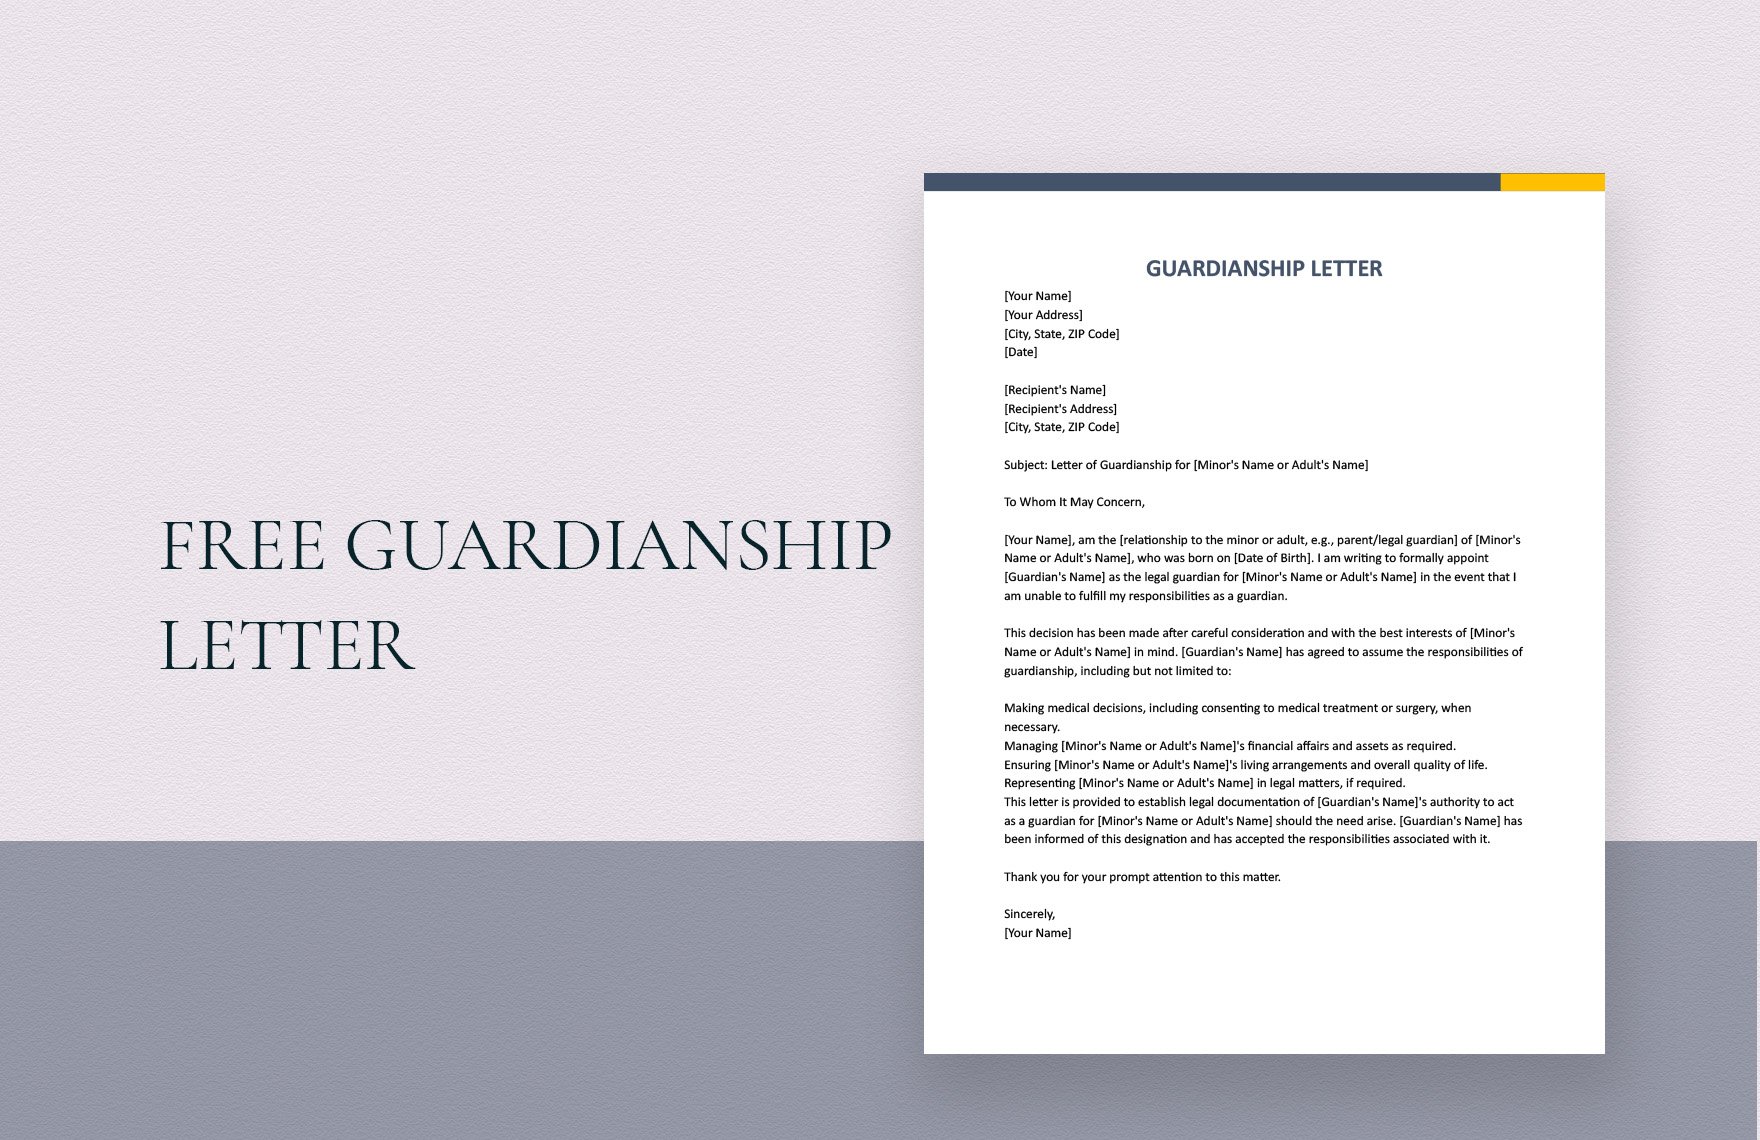 Guardianship Letter in Word, Google Docs